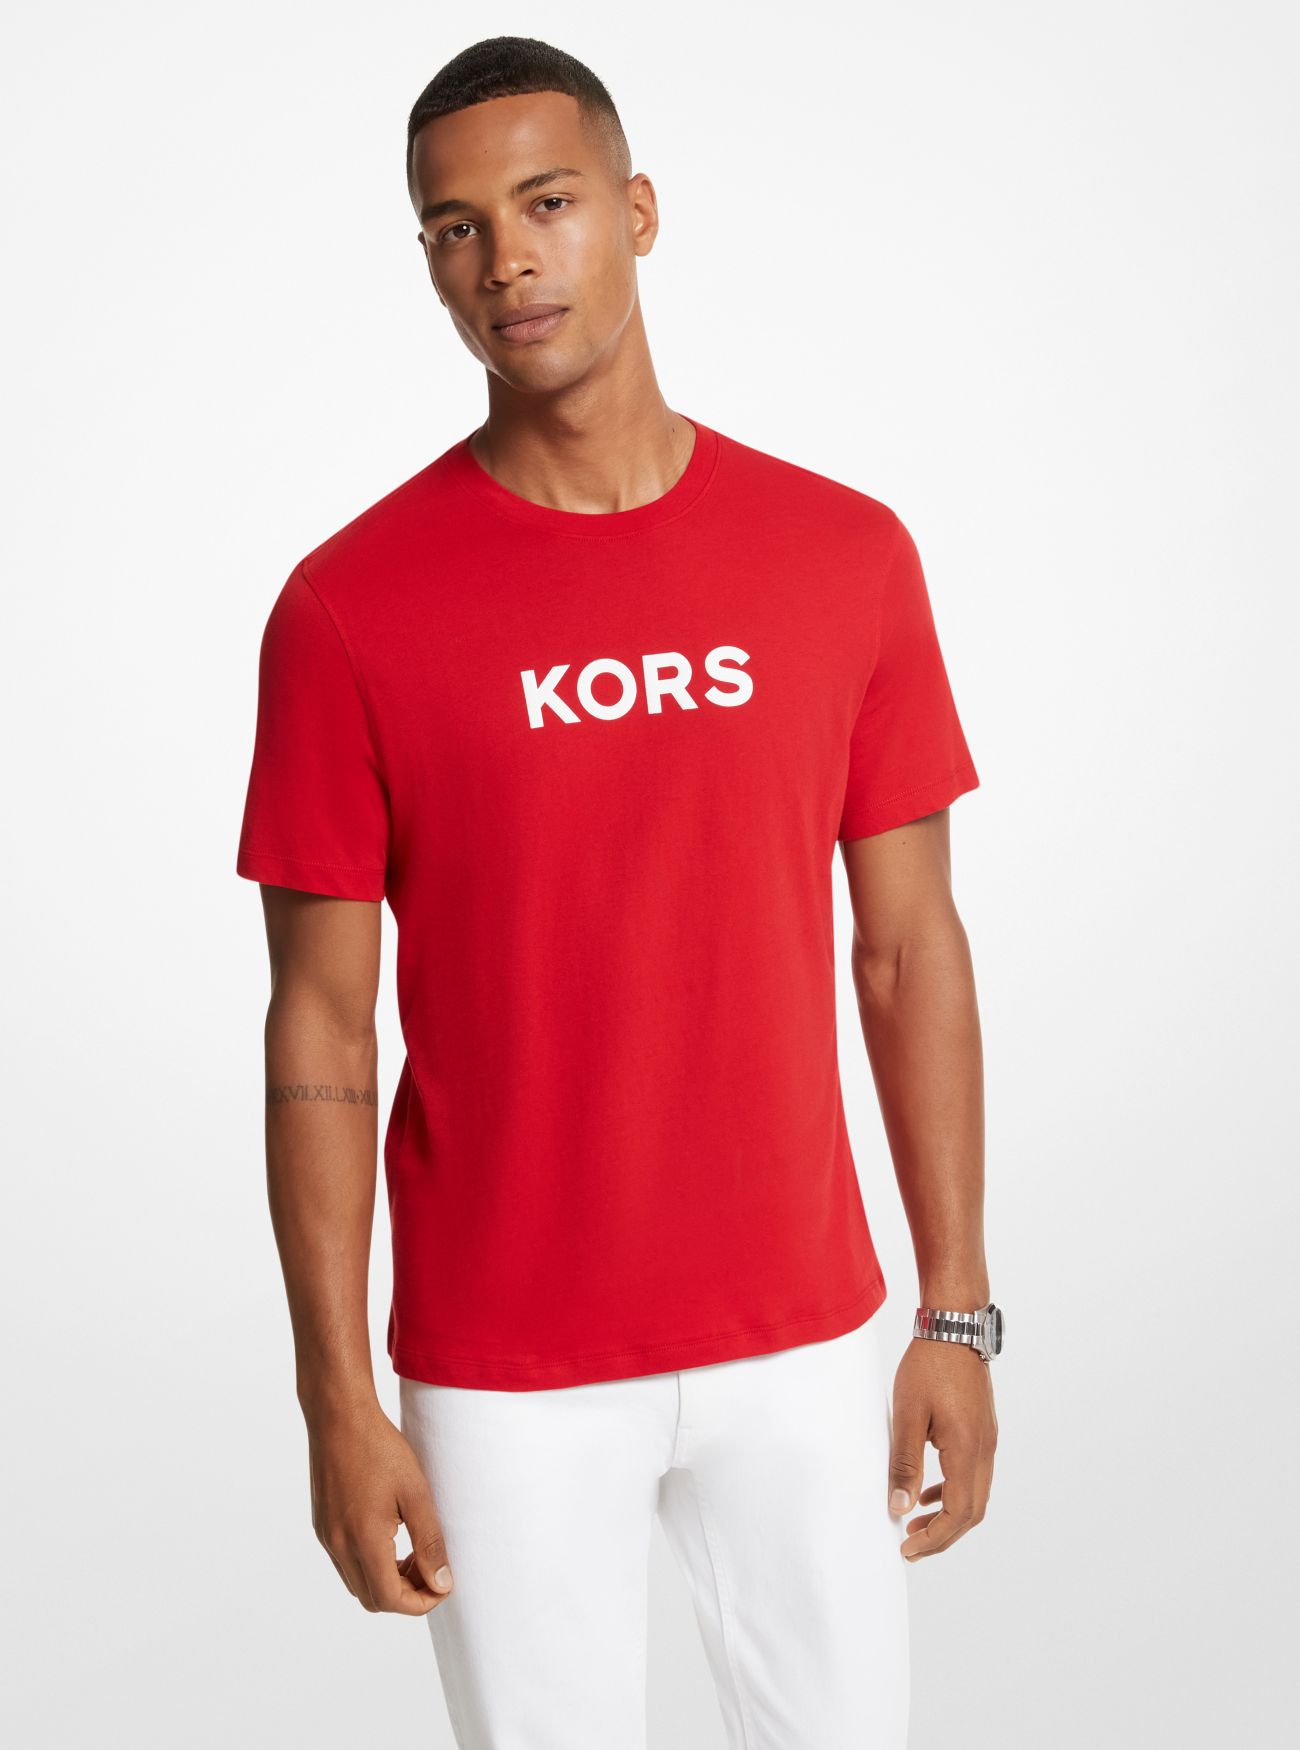 MK KORS Cotton T-Shirt - Red - Michael Kors